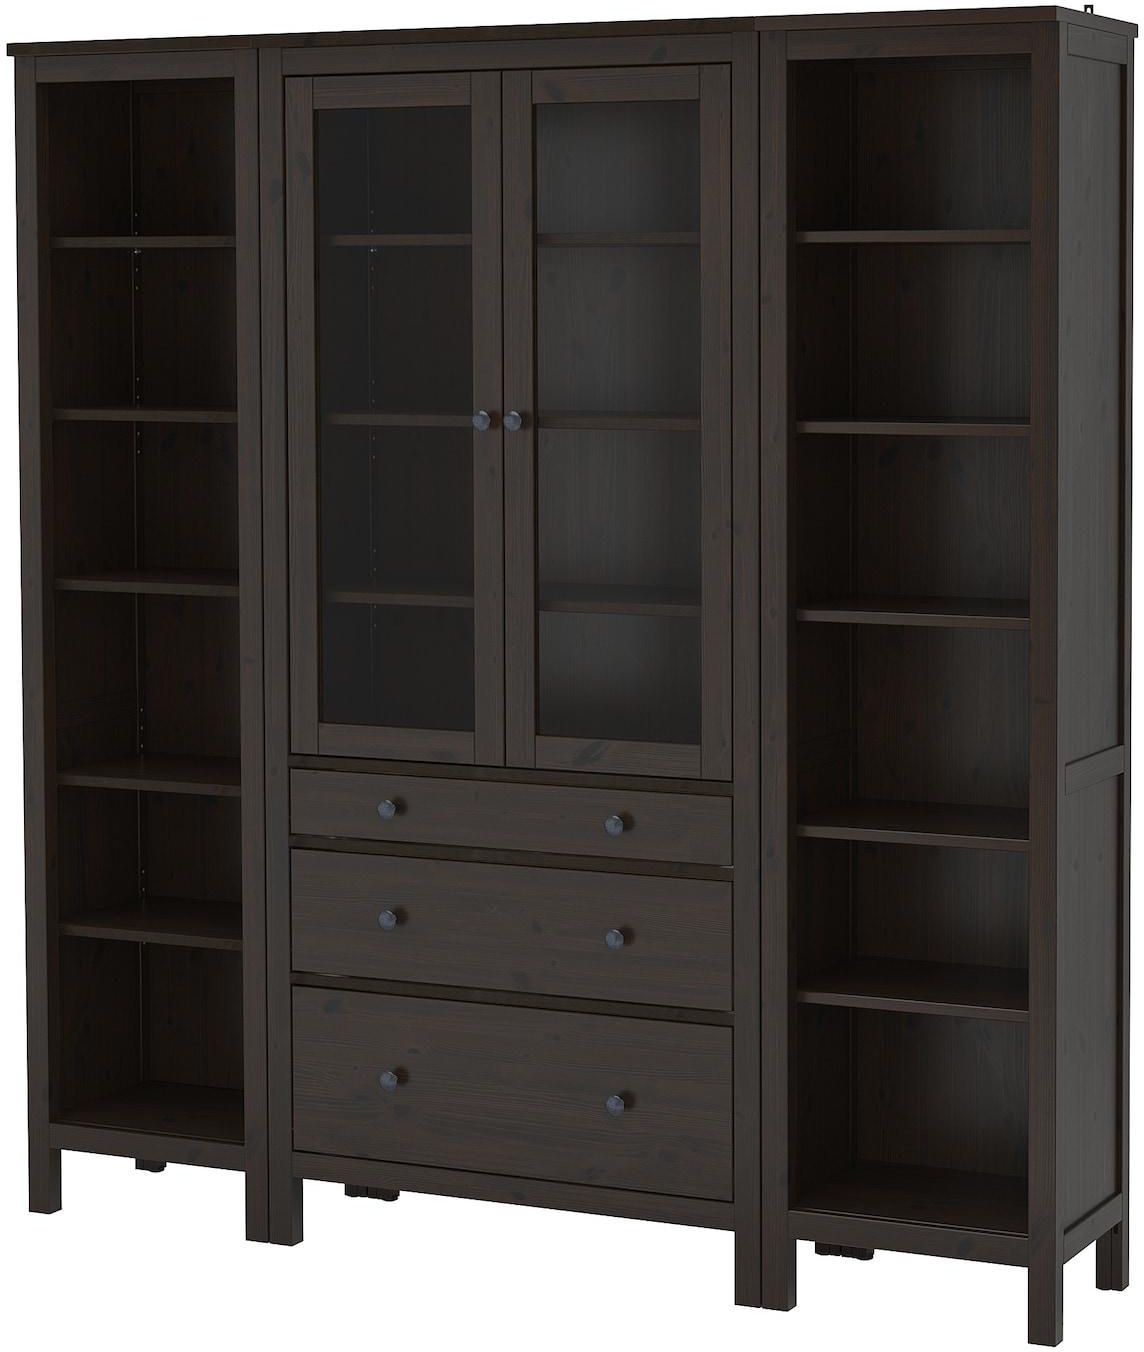 HEMNES Storage combination w doors/drawers - black-brown/clear glass 188x197 cm